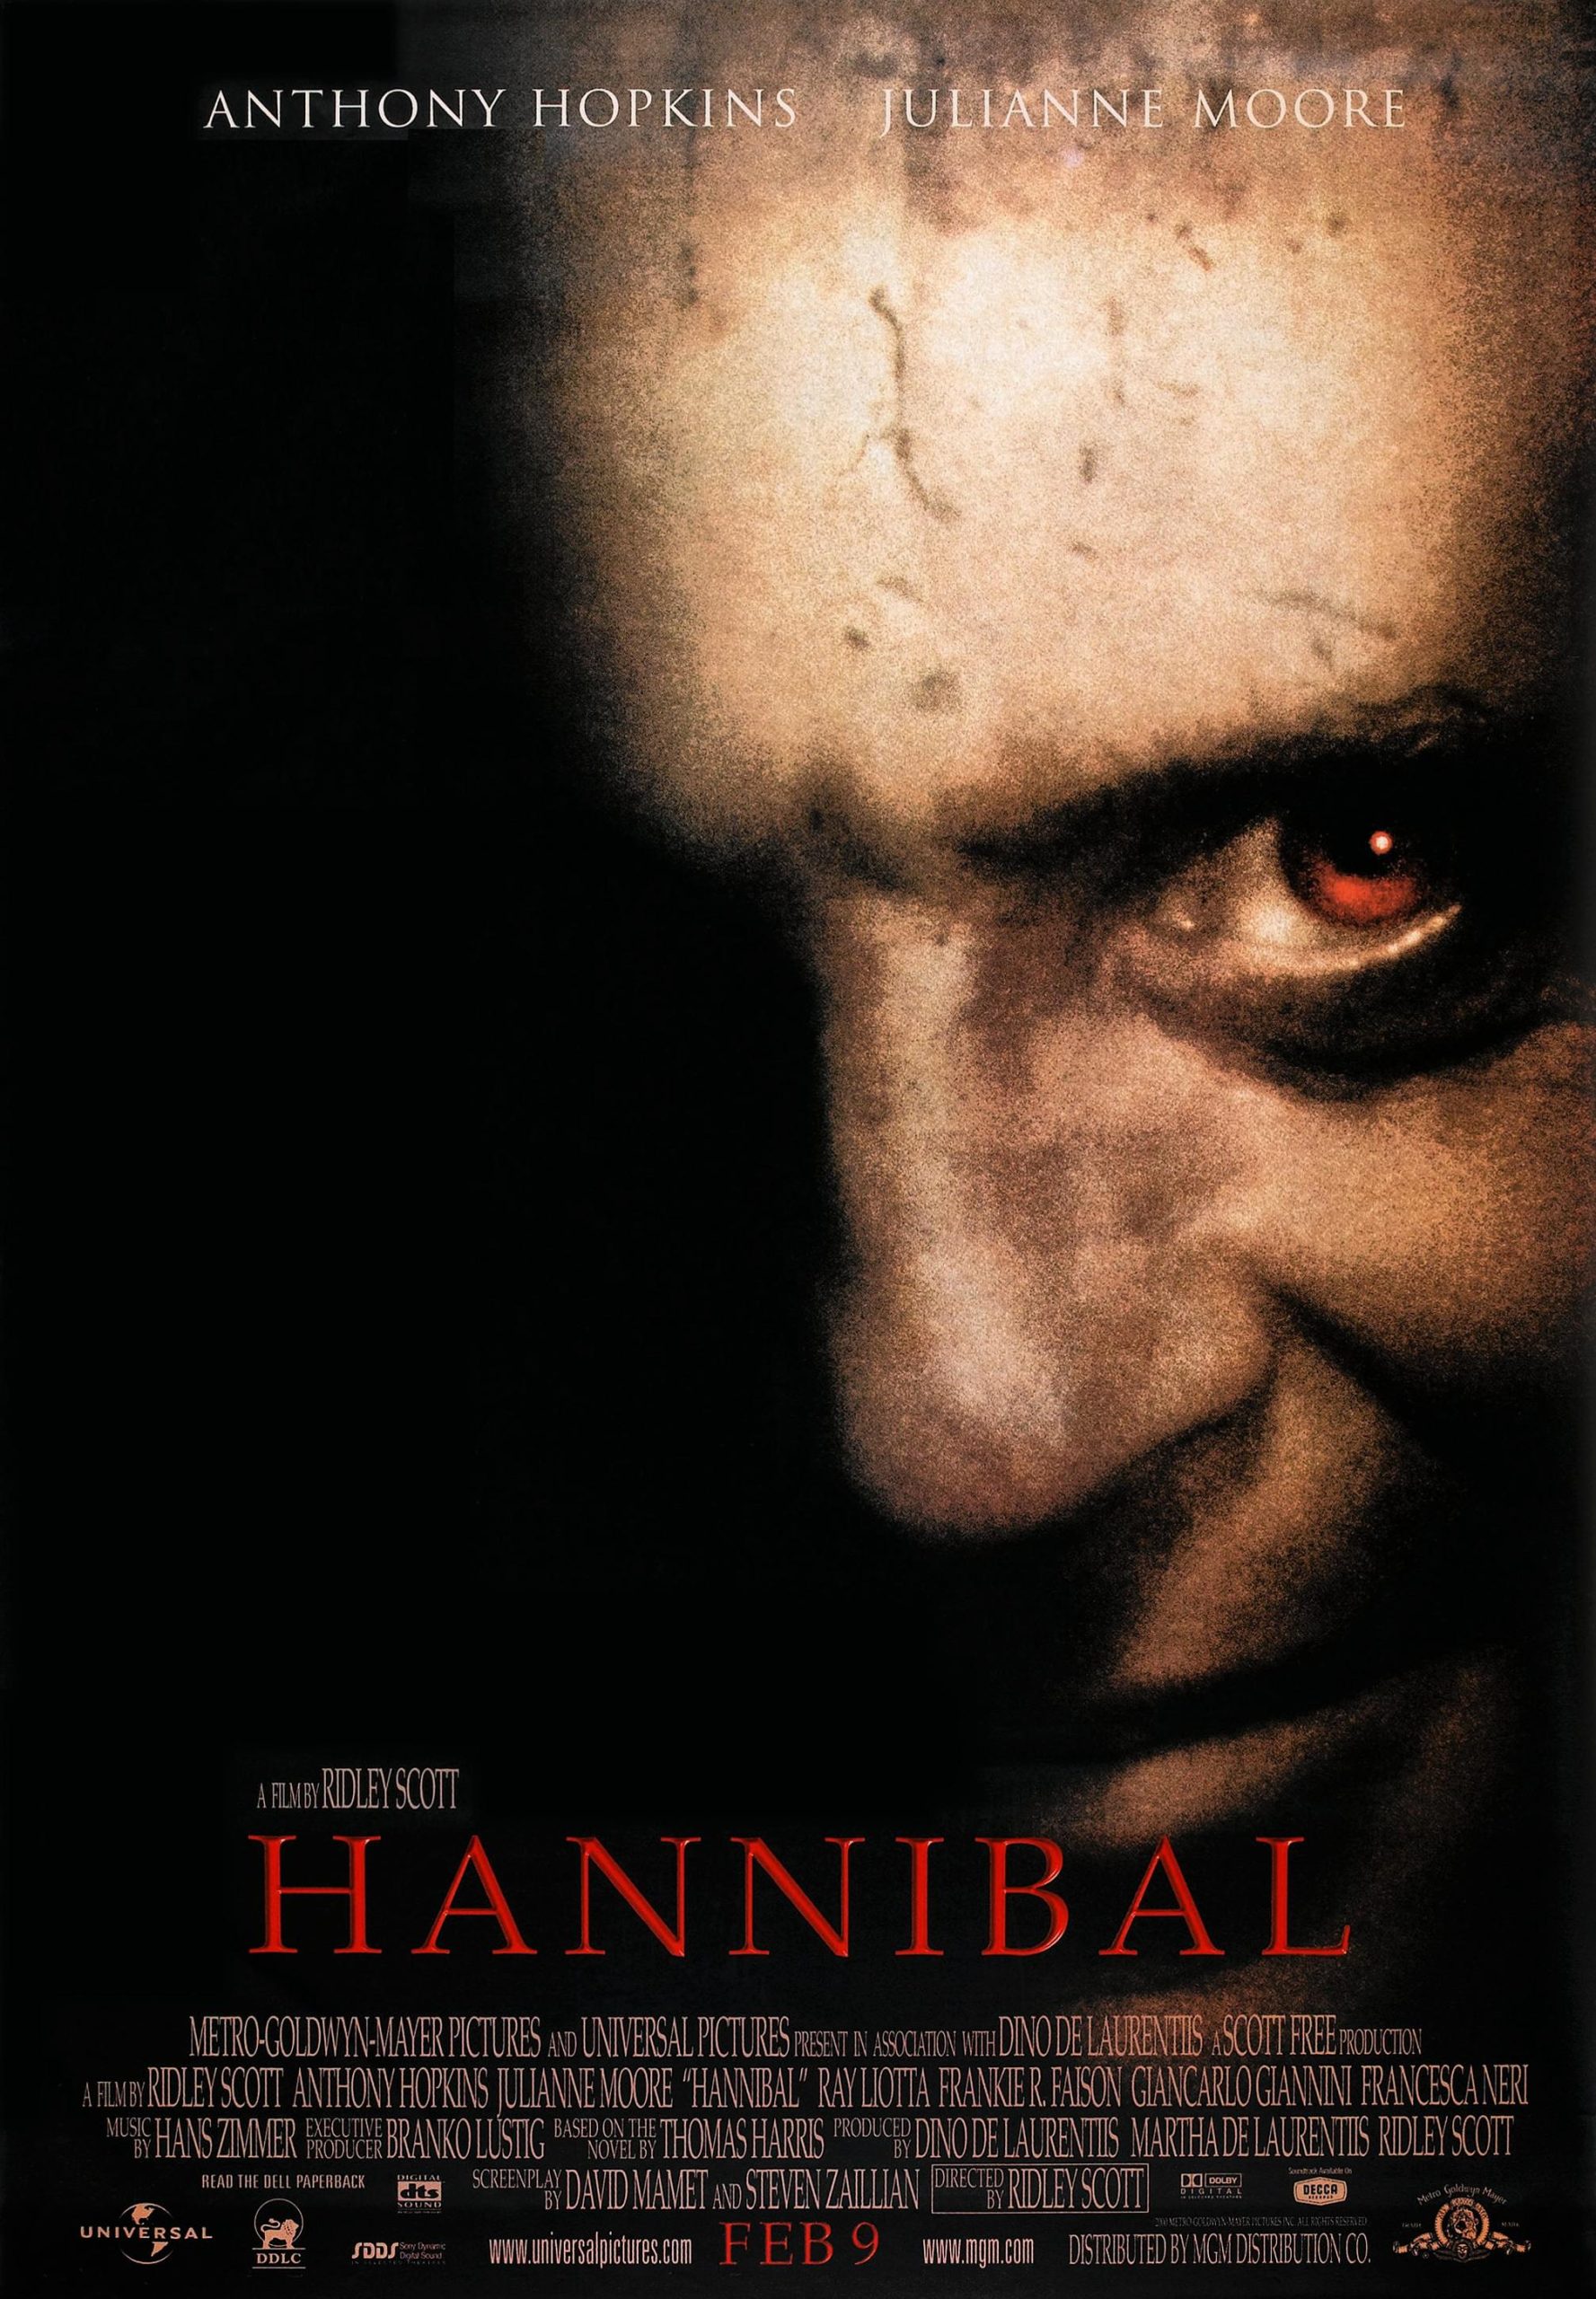 Hannibal (2001) ฮันนิบาล อำมหิตลั่นโลก Anthony Hopkins